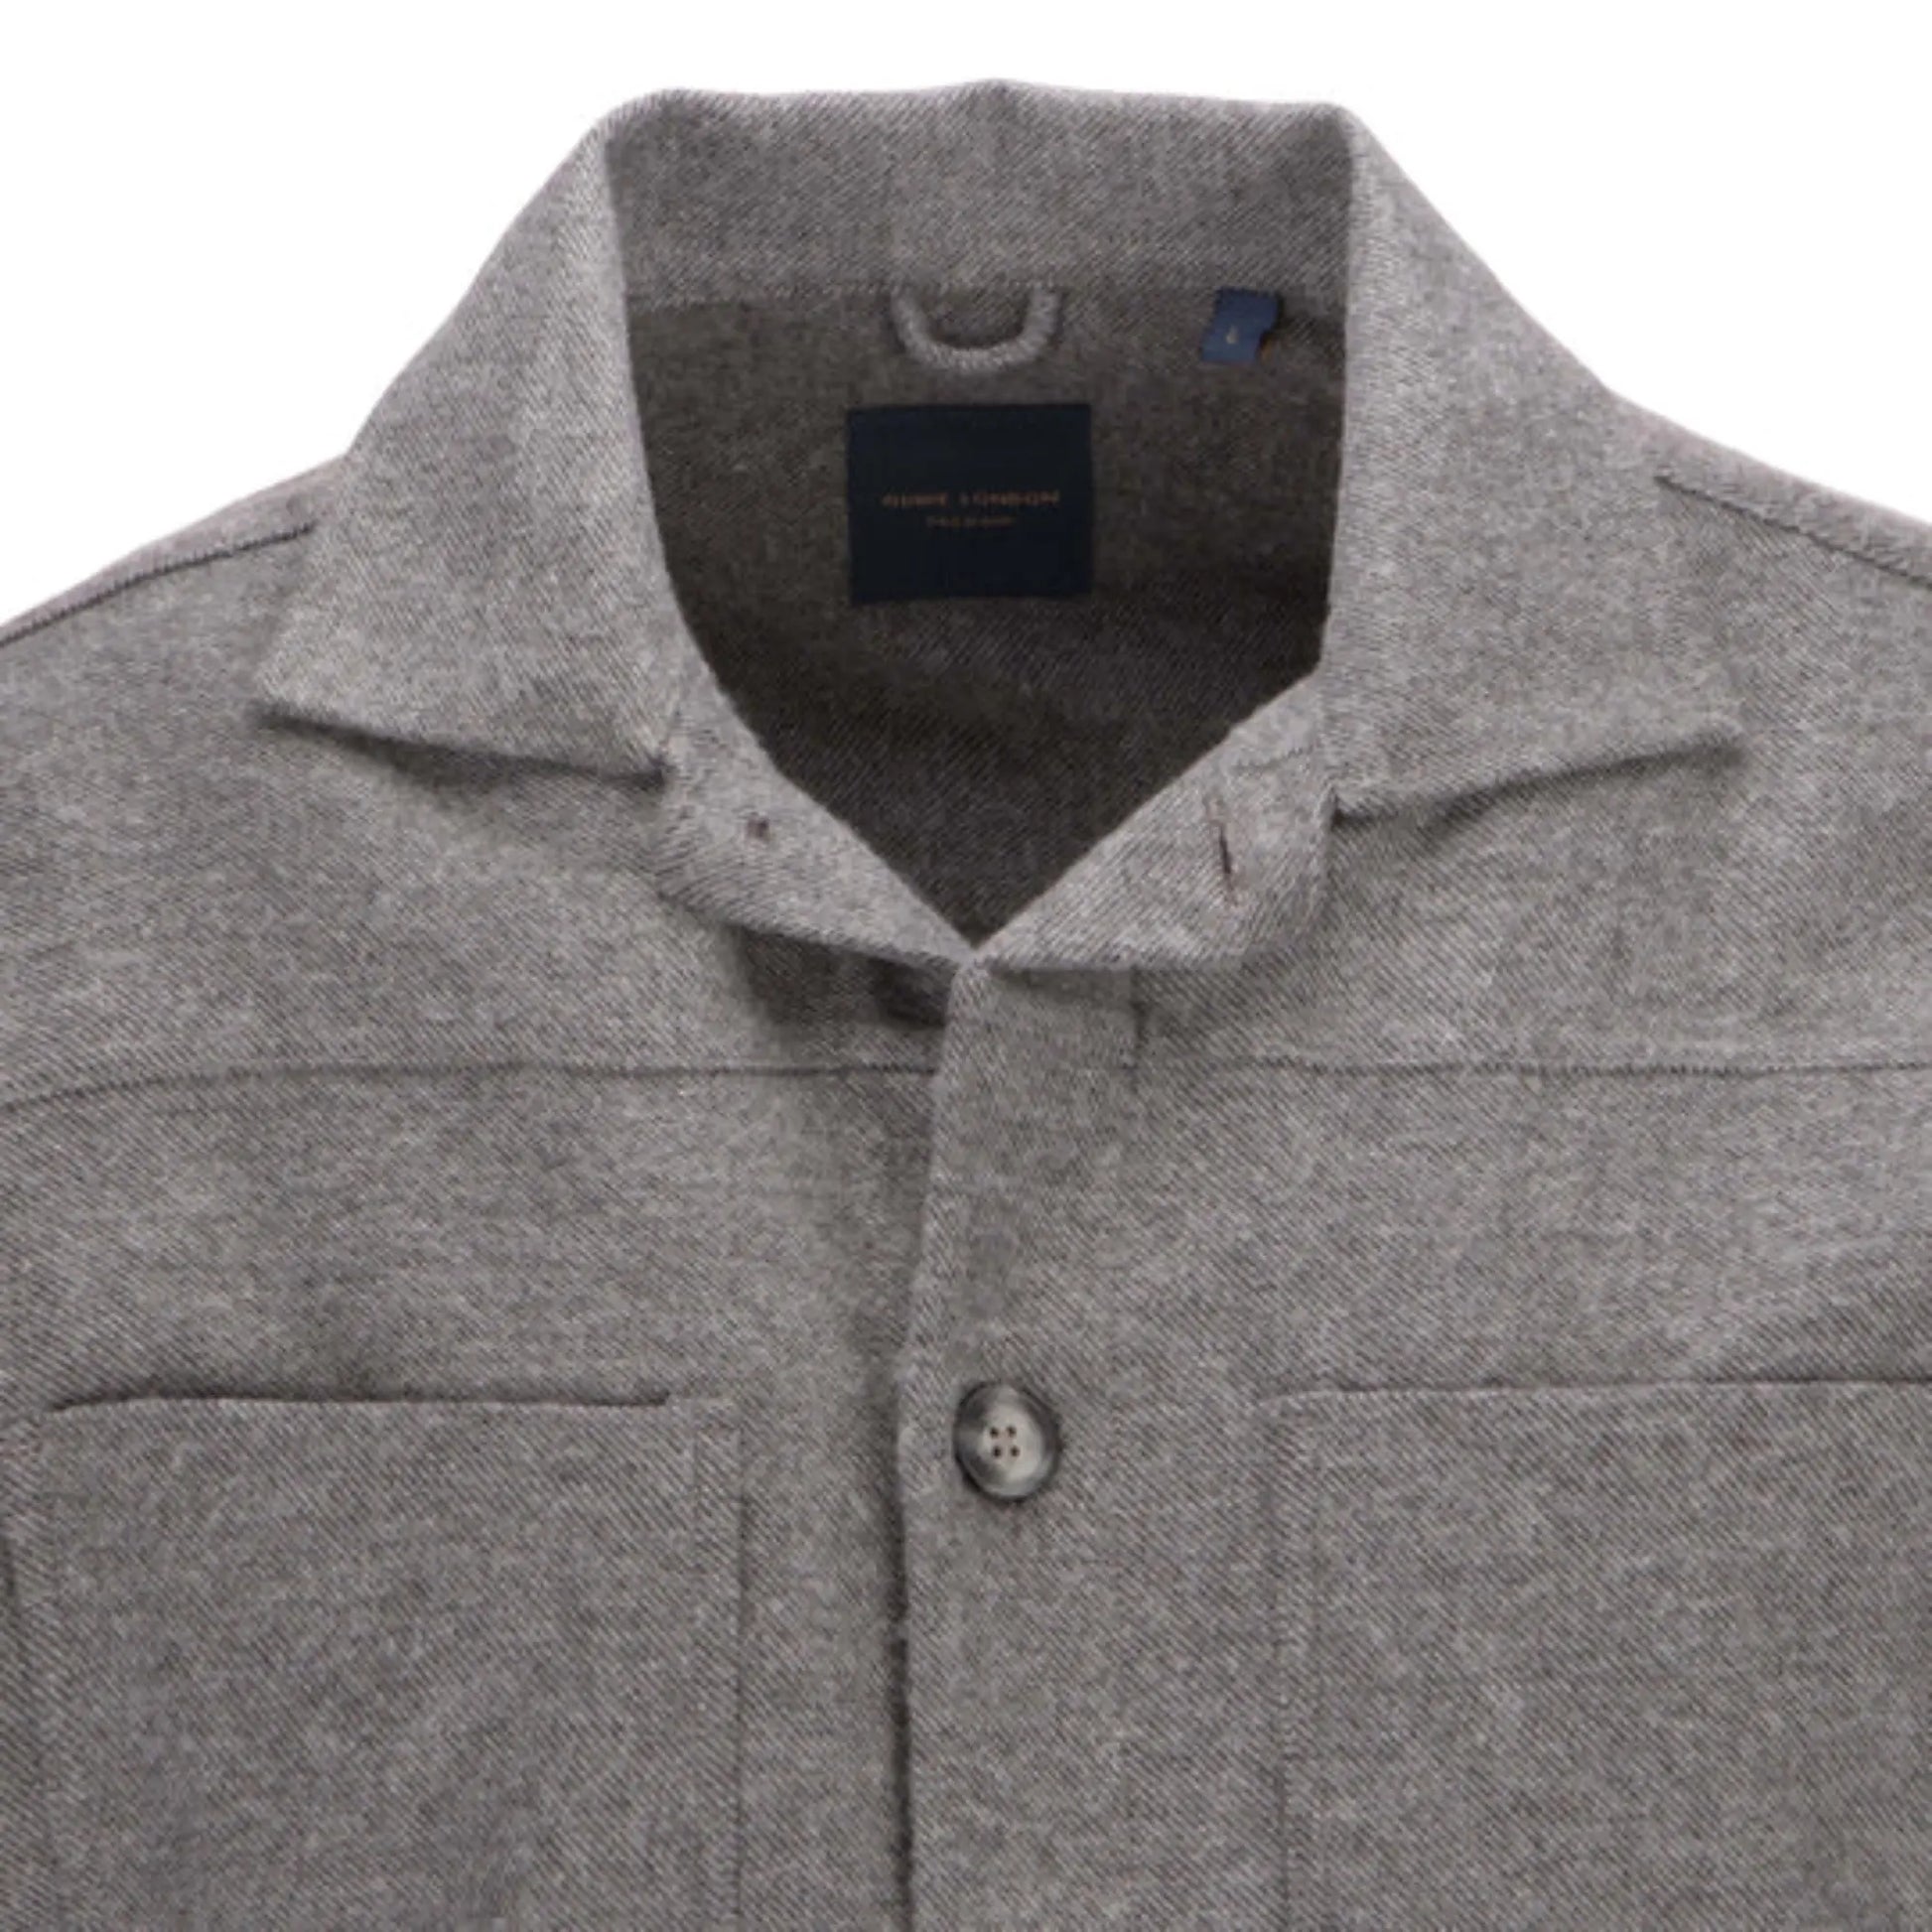 Buy Guide London Brushed Cotton Twill Overshirt - Grey | Overshirtss at Woven Durham